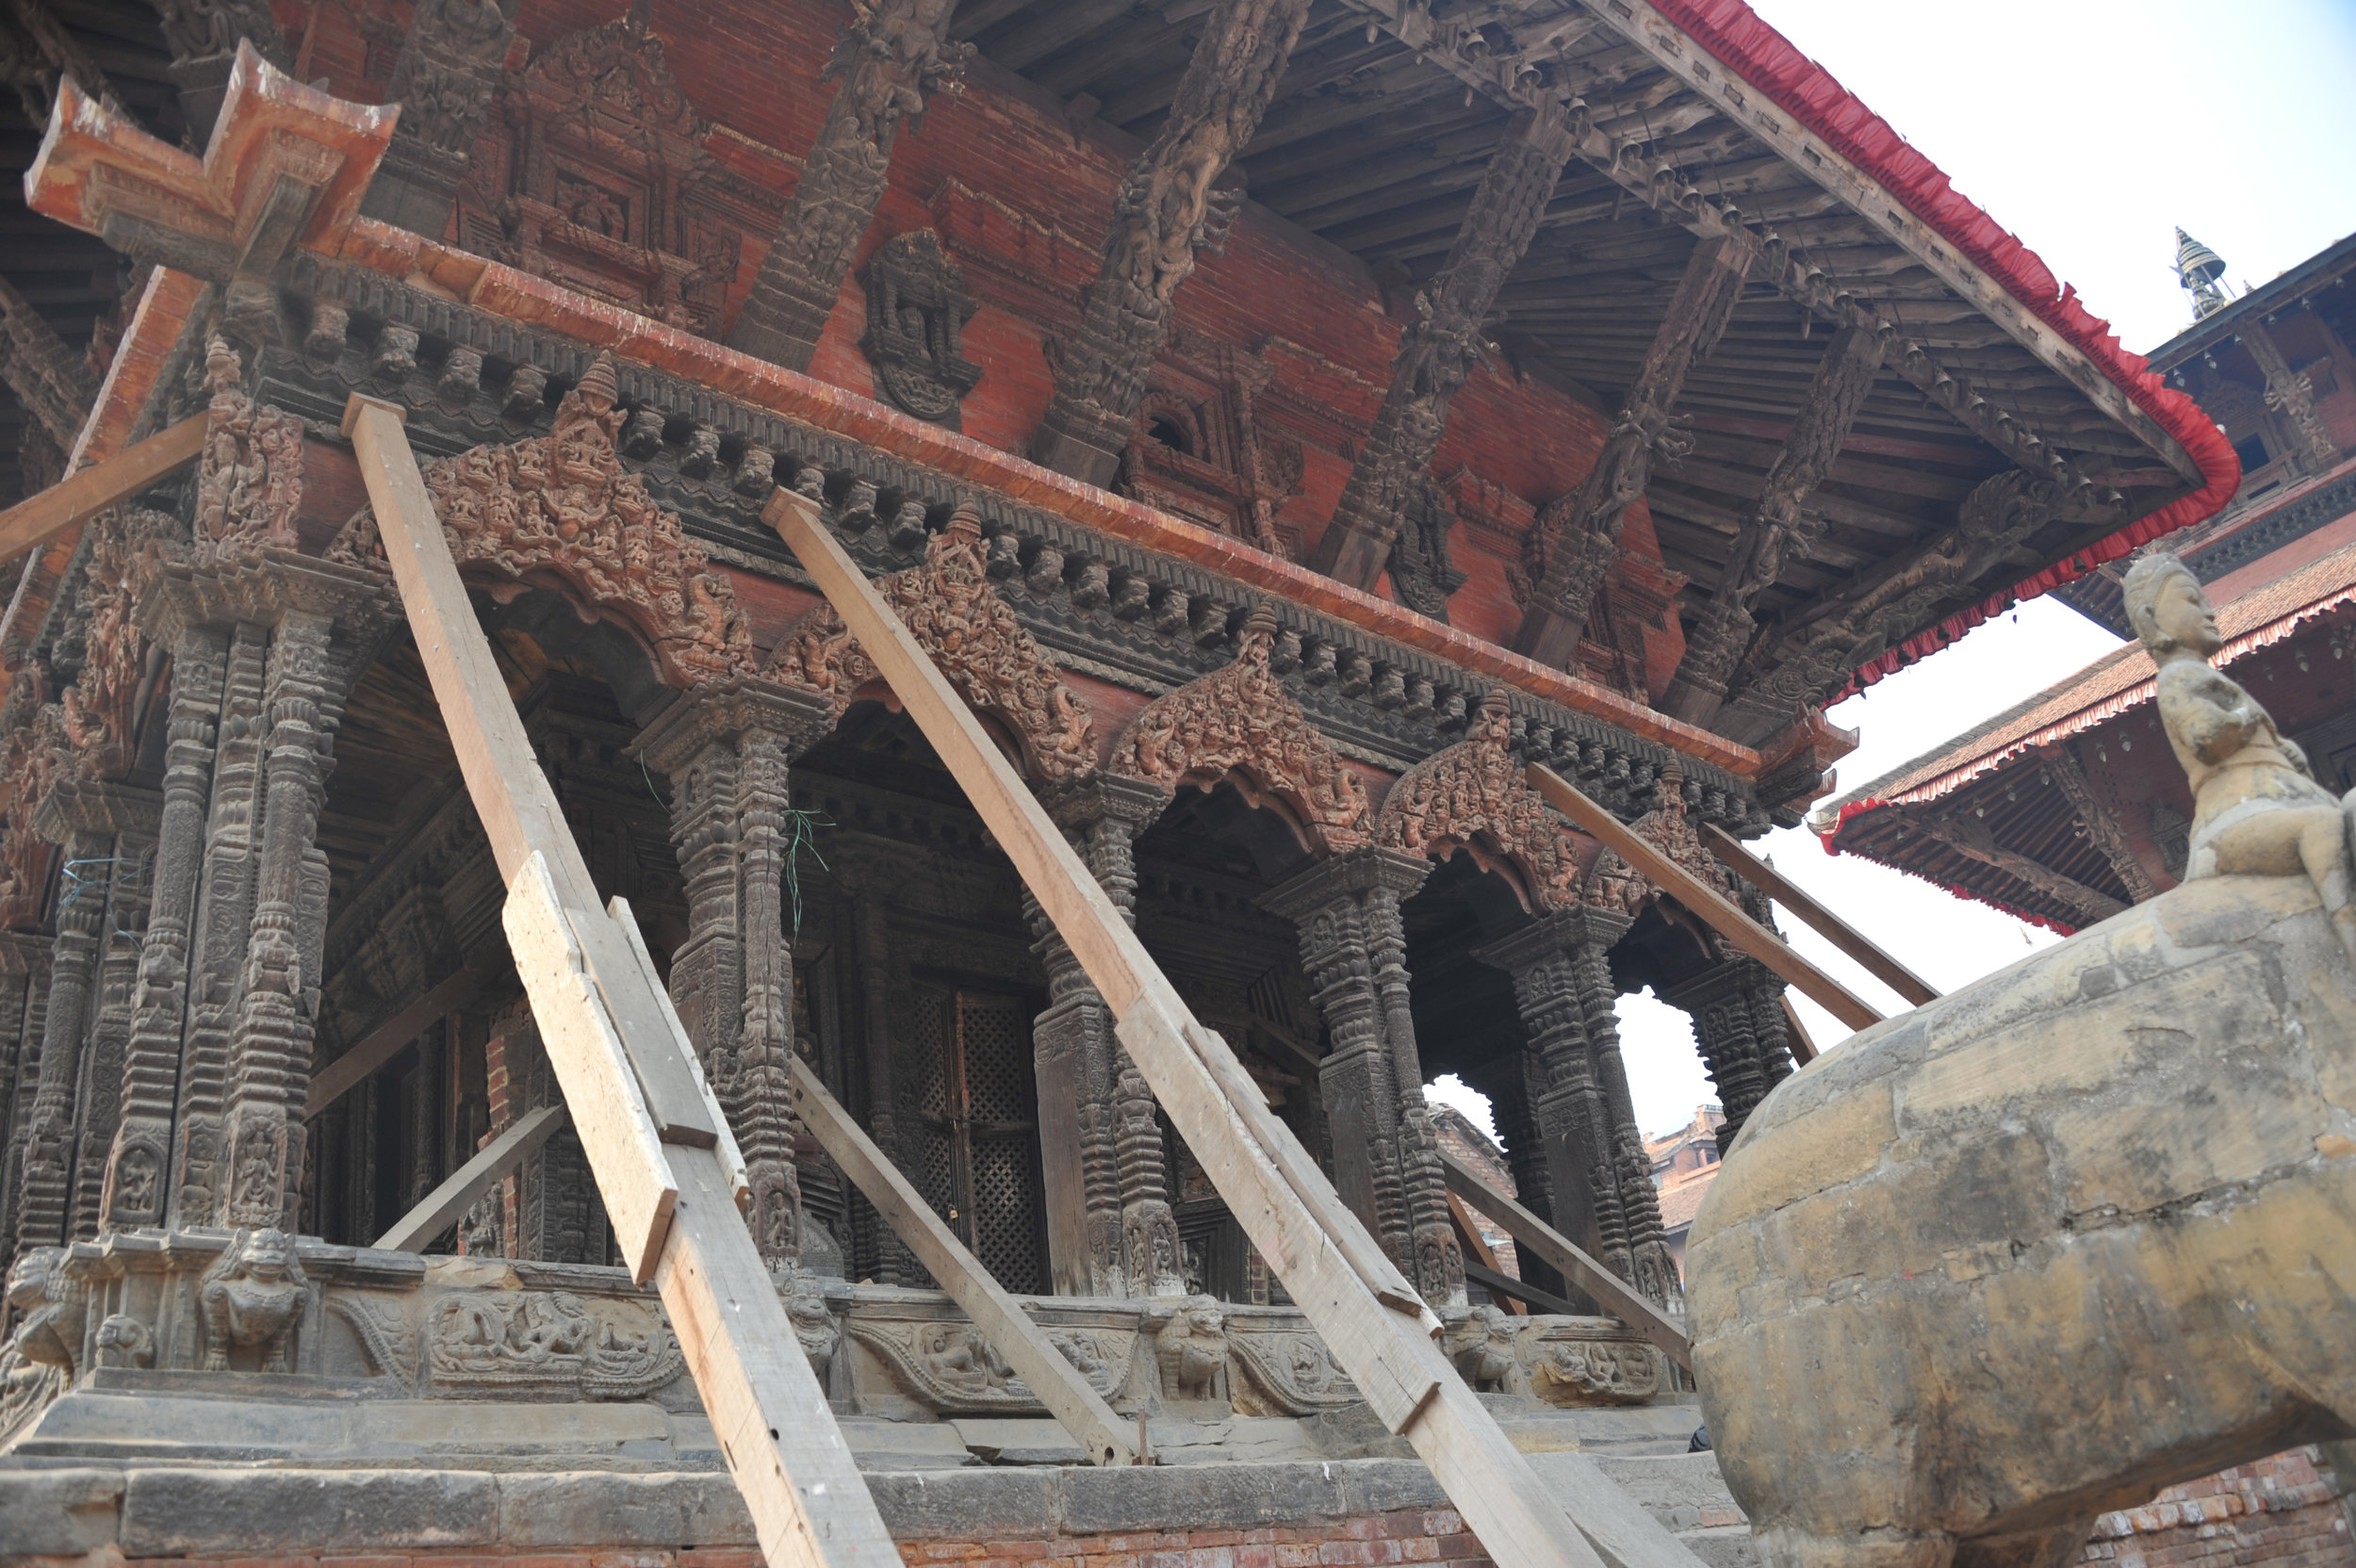 mck nepal 2016 post earthquake temple shored up DSC_6279.jpg